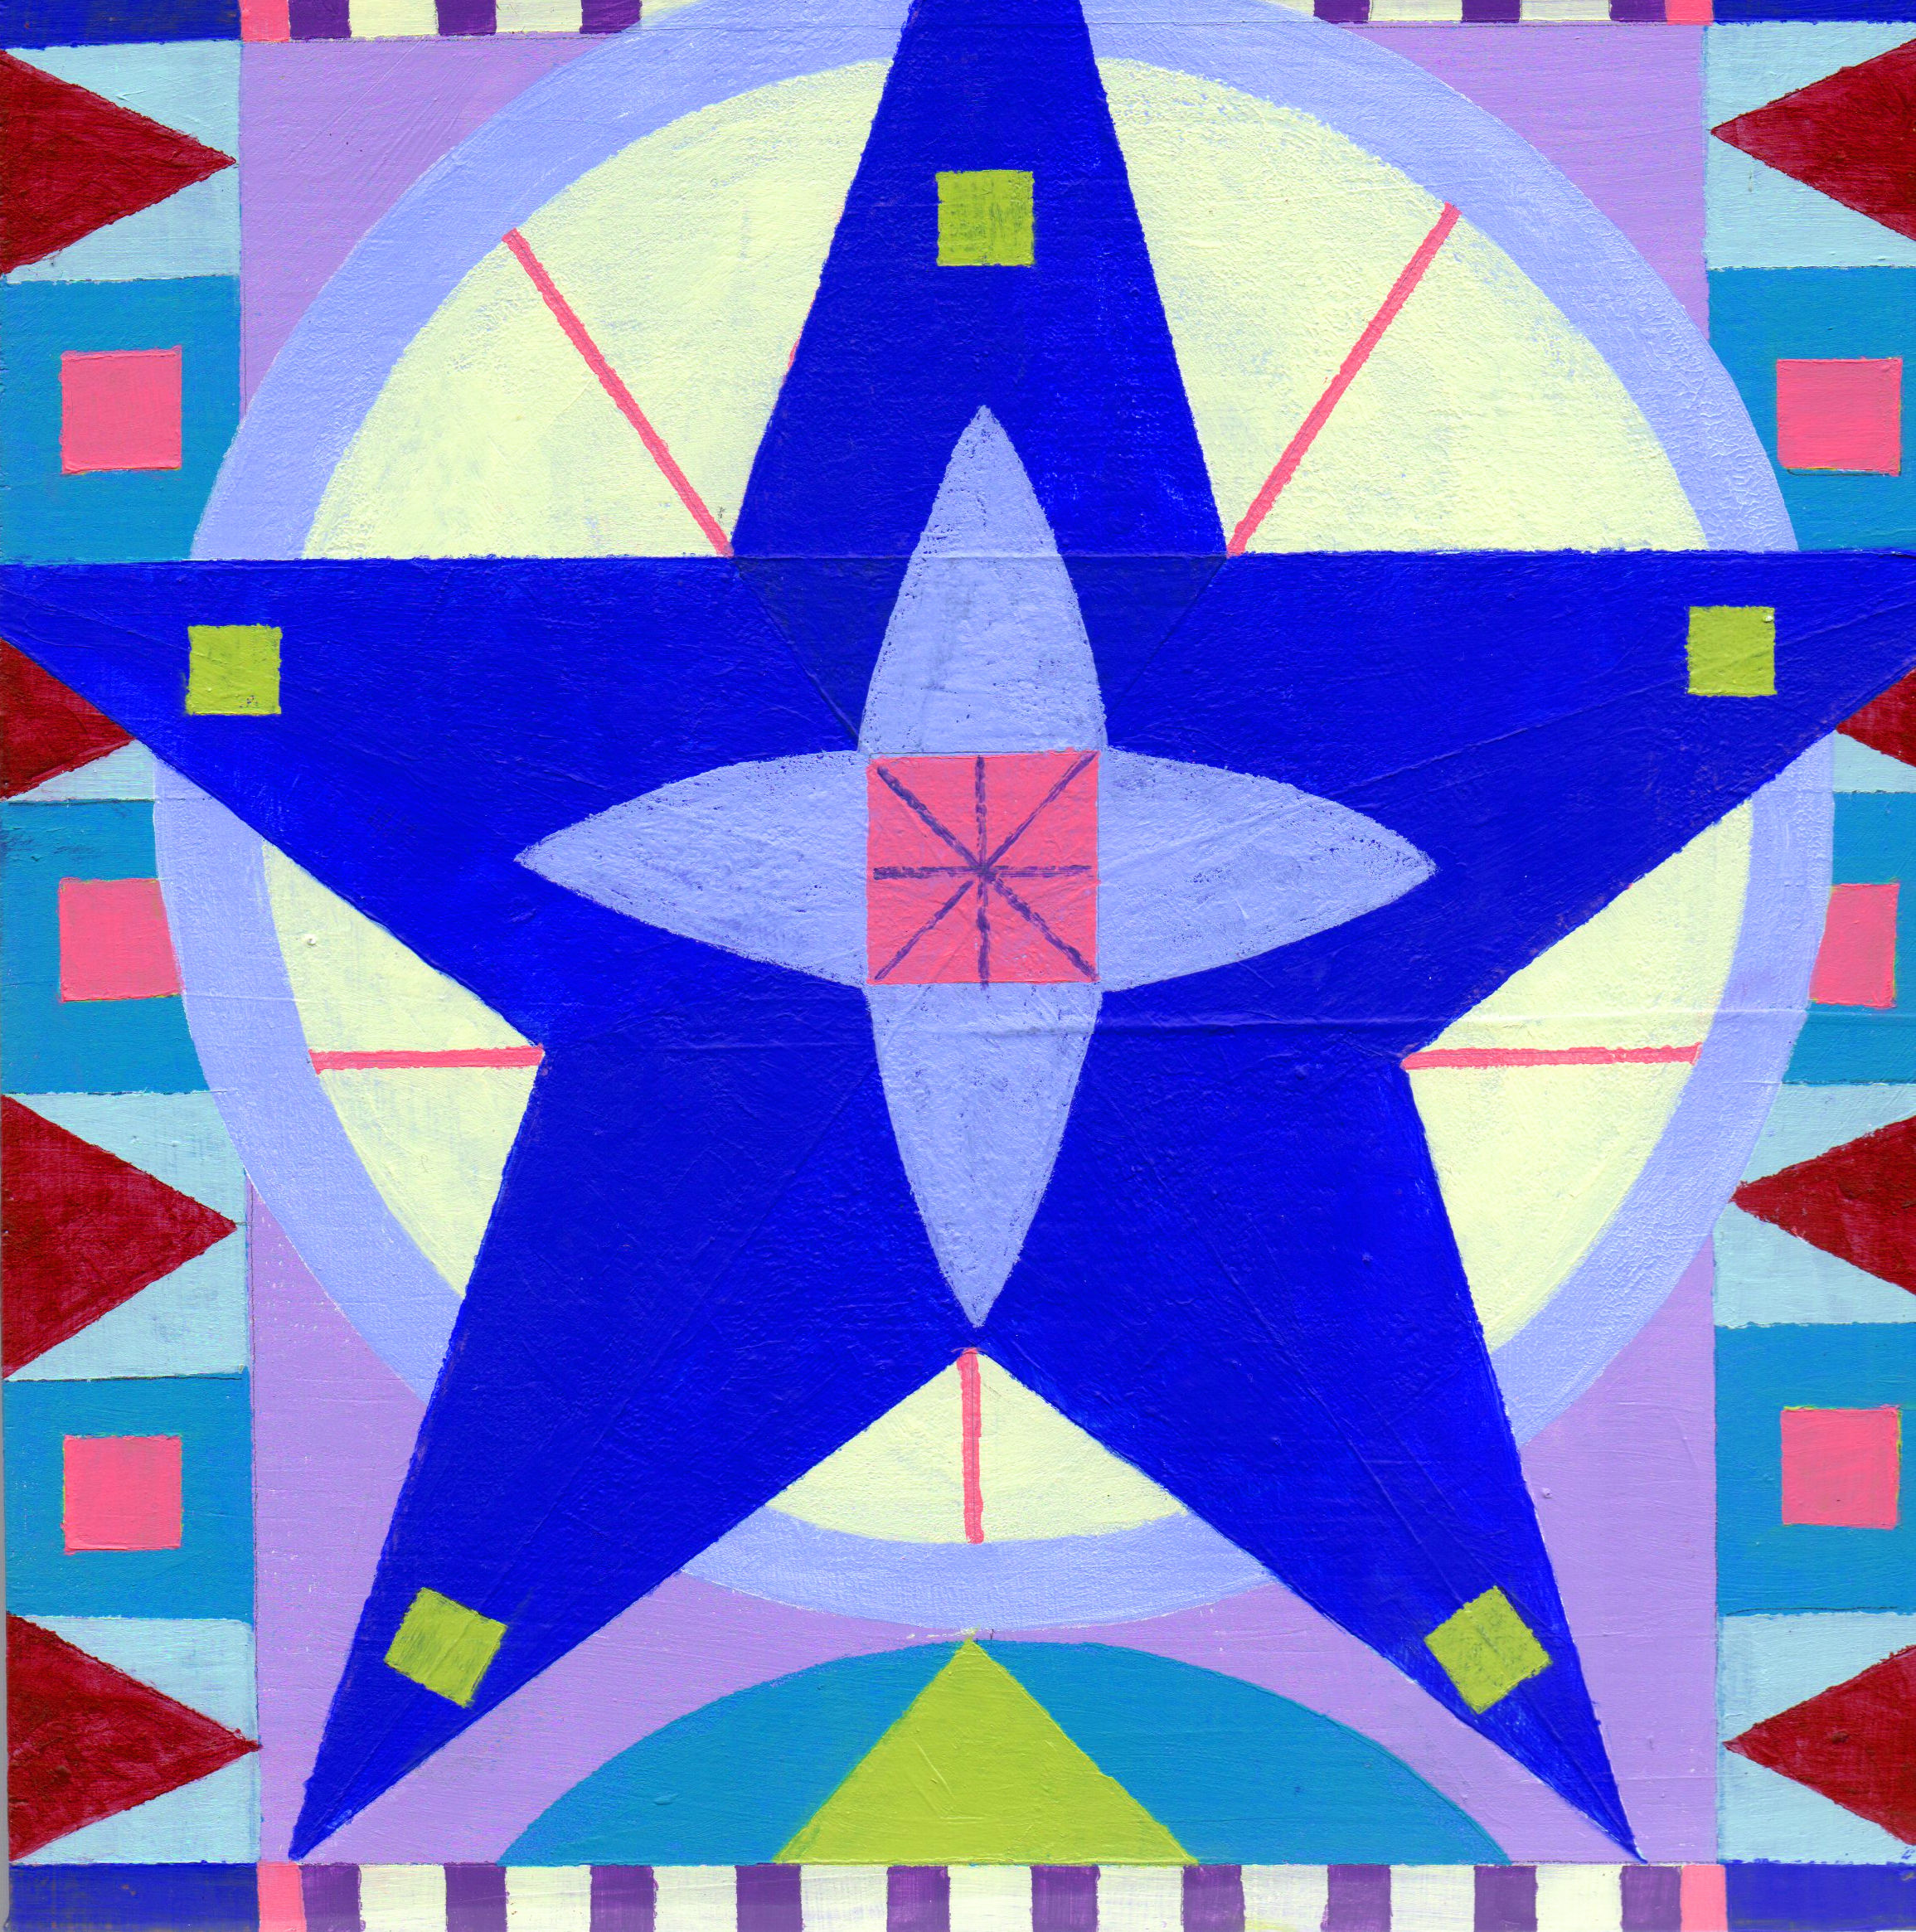 Star Map 4
Acrylic on Wood Panel, 8" x 8" x 1"